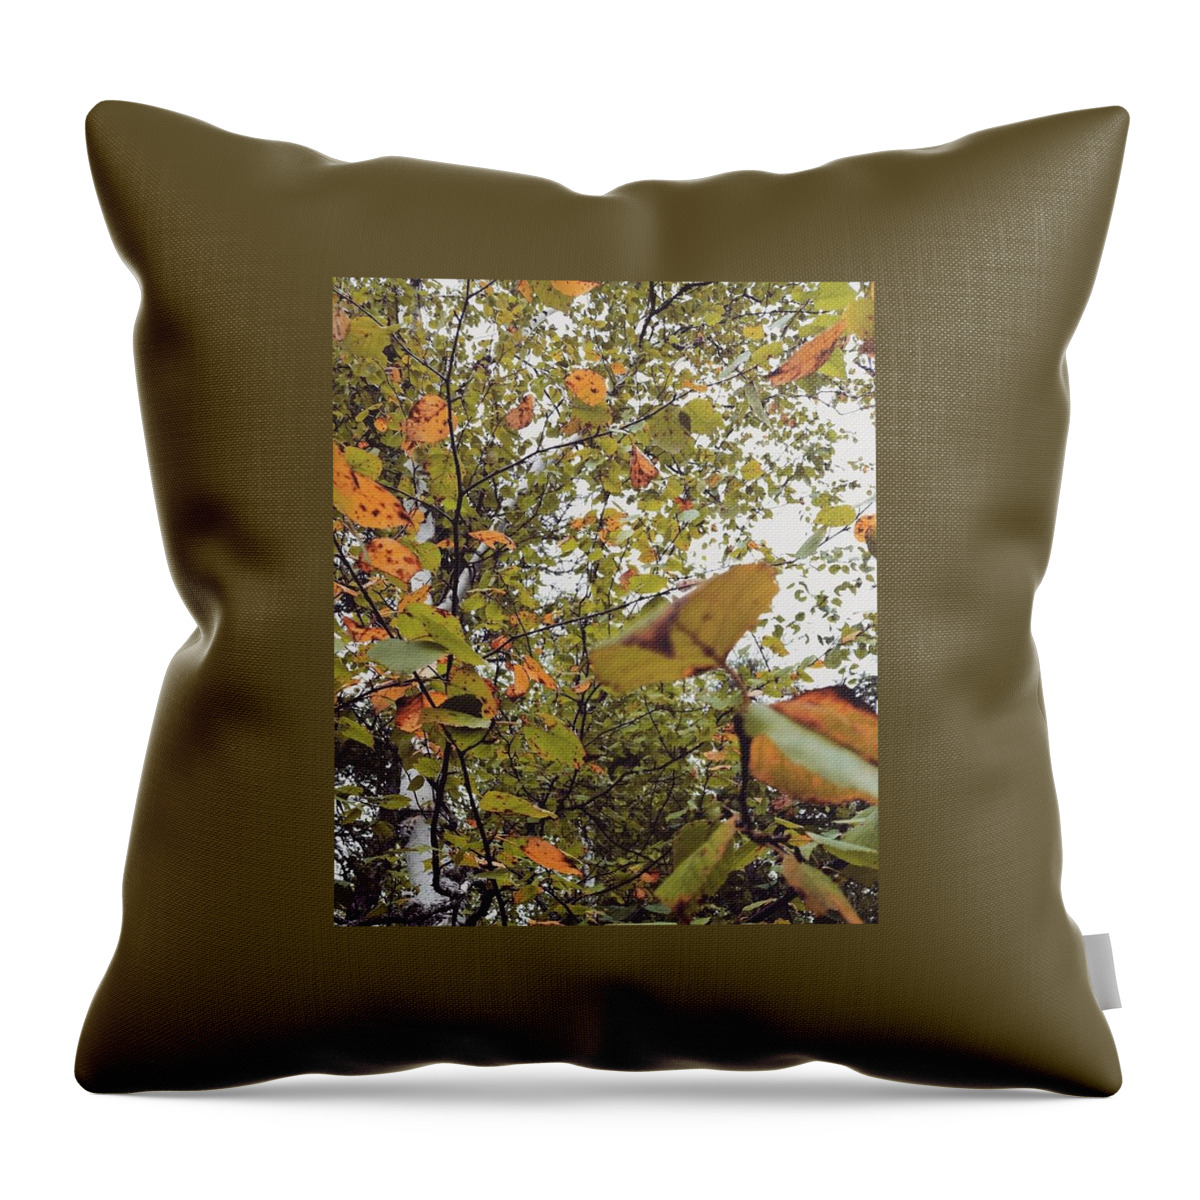 Autumn Throw Pillow featuring the photograph Autumn by Amanda Taylor